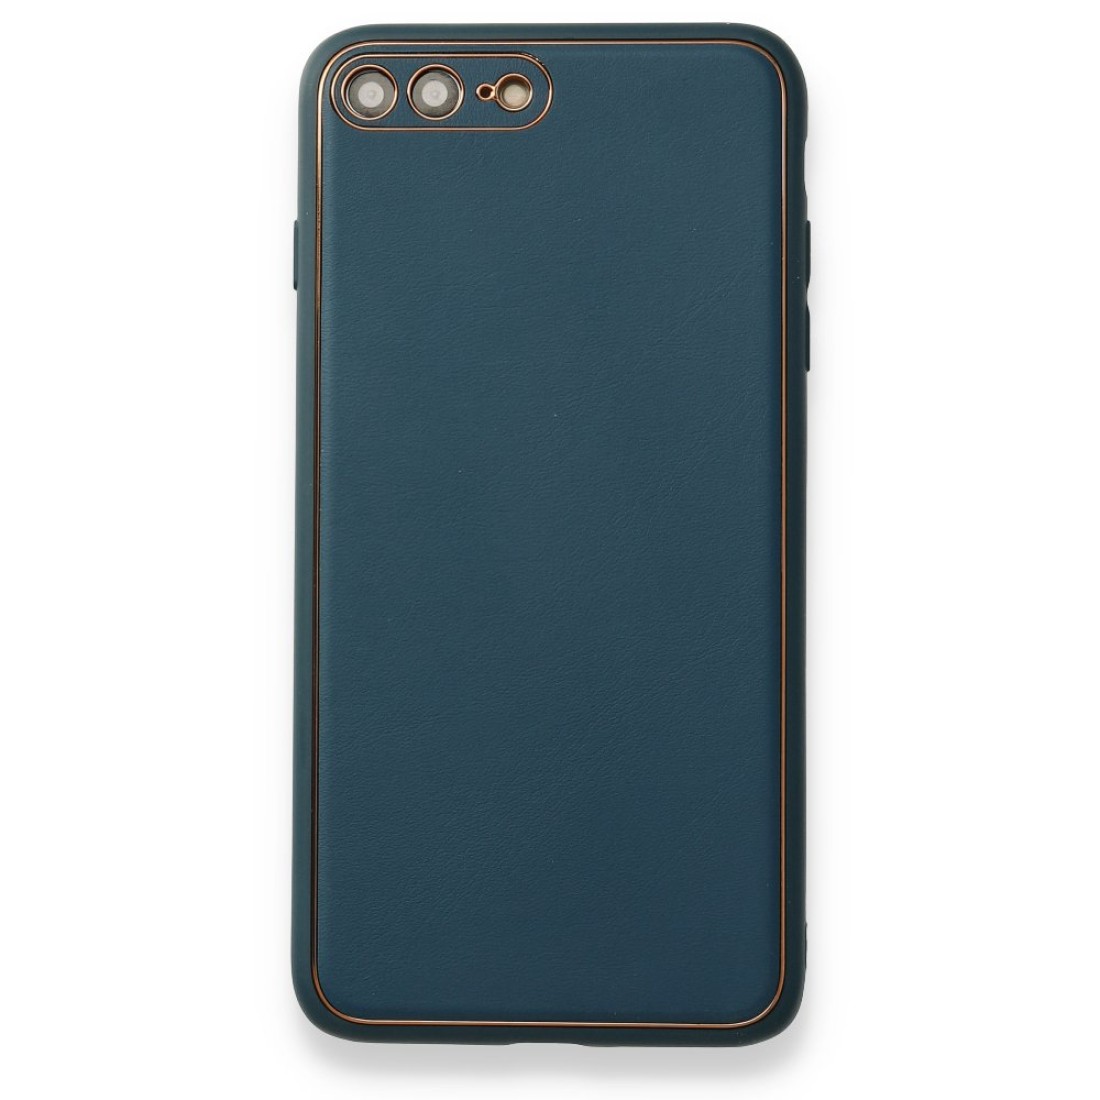 Apple iPhone 7 Plus Kılıf Coco Deri Silikon Kapak - Mavi